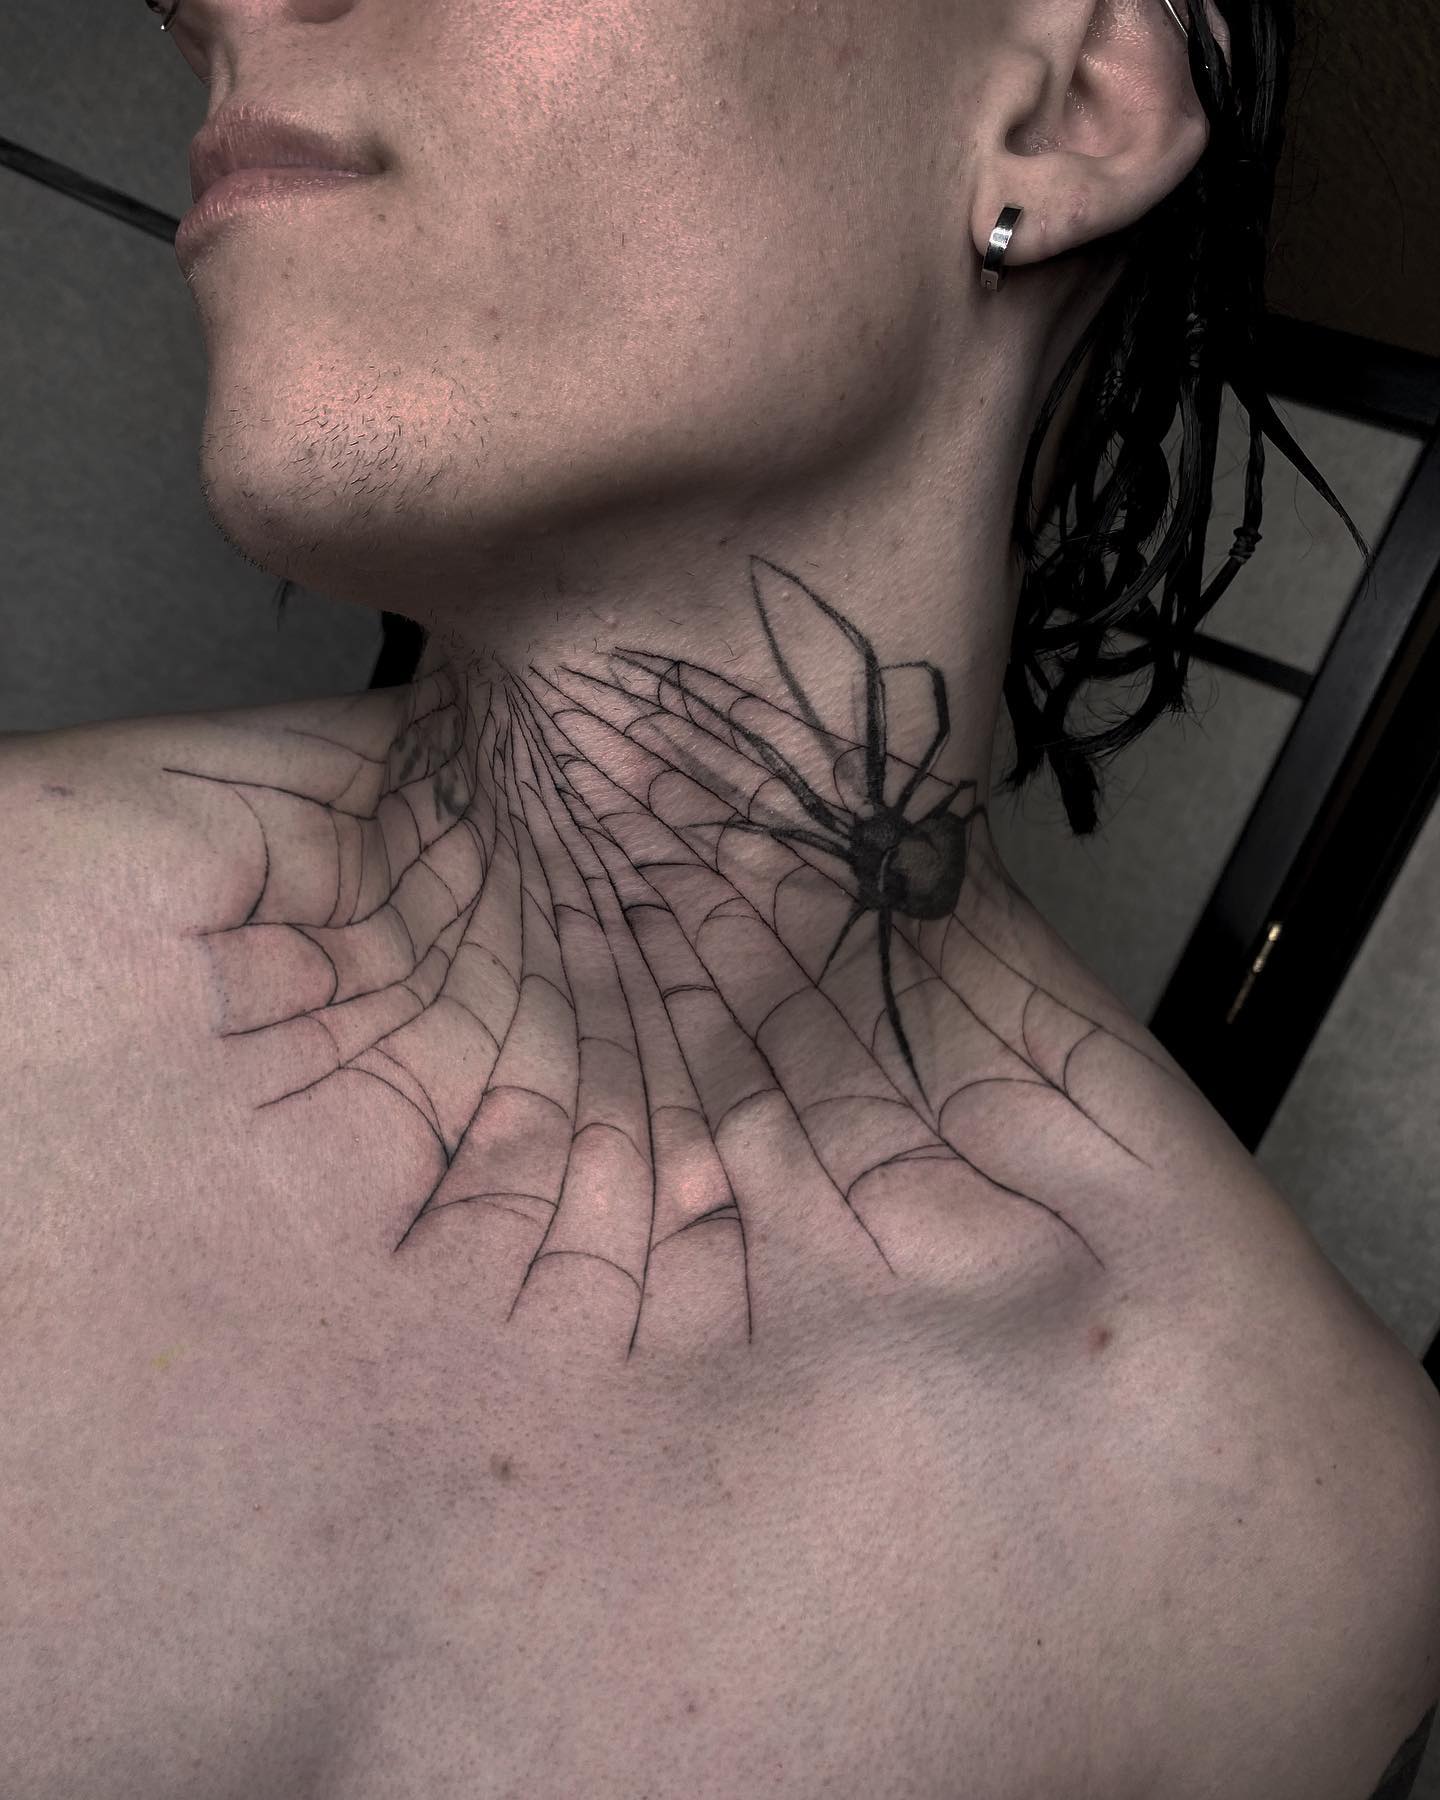 bunga mutz recommends Spider Web Throat Tattoo